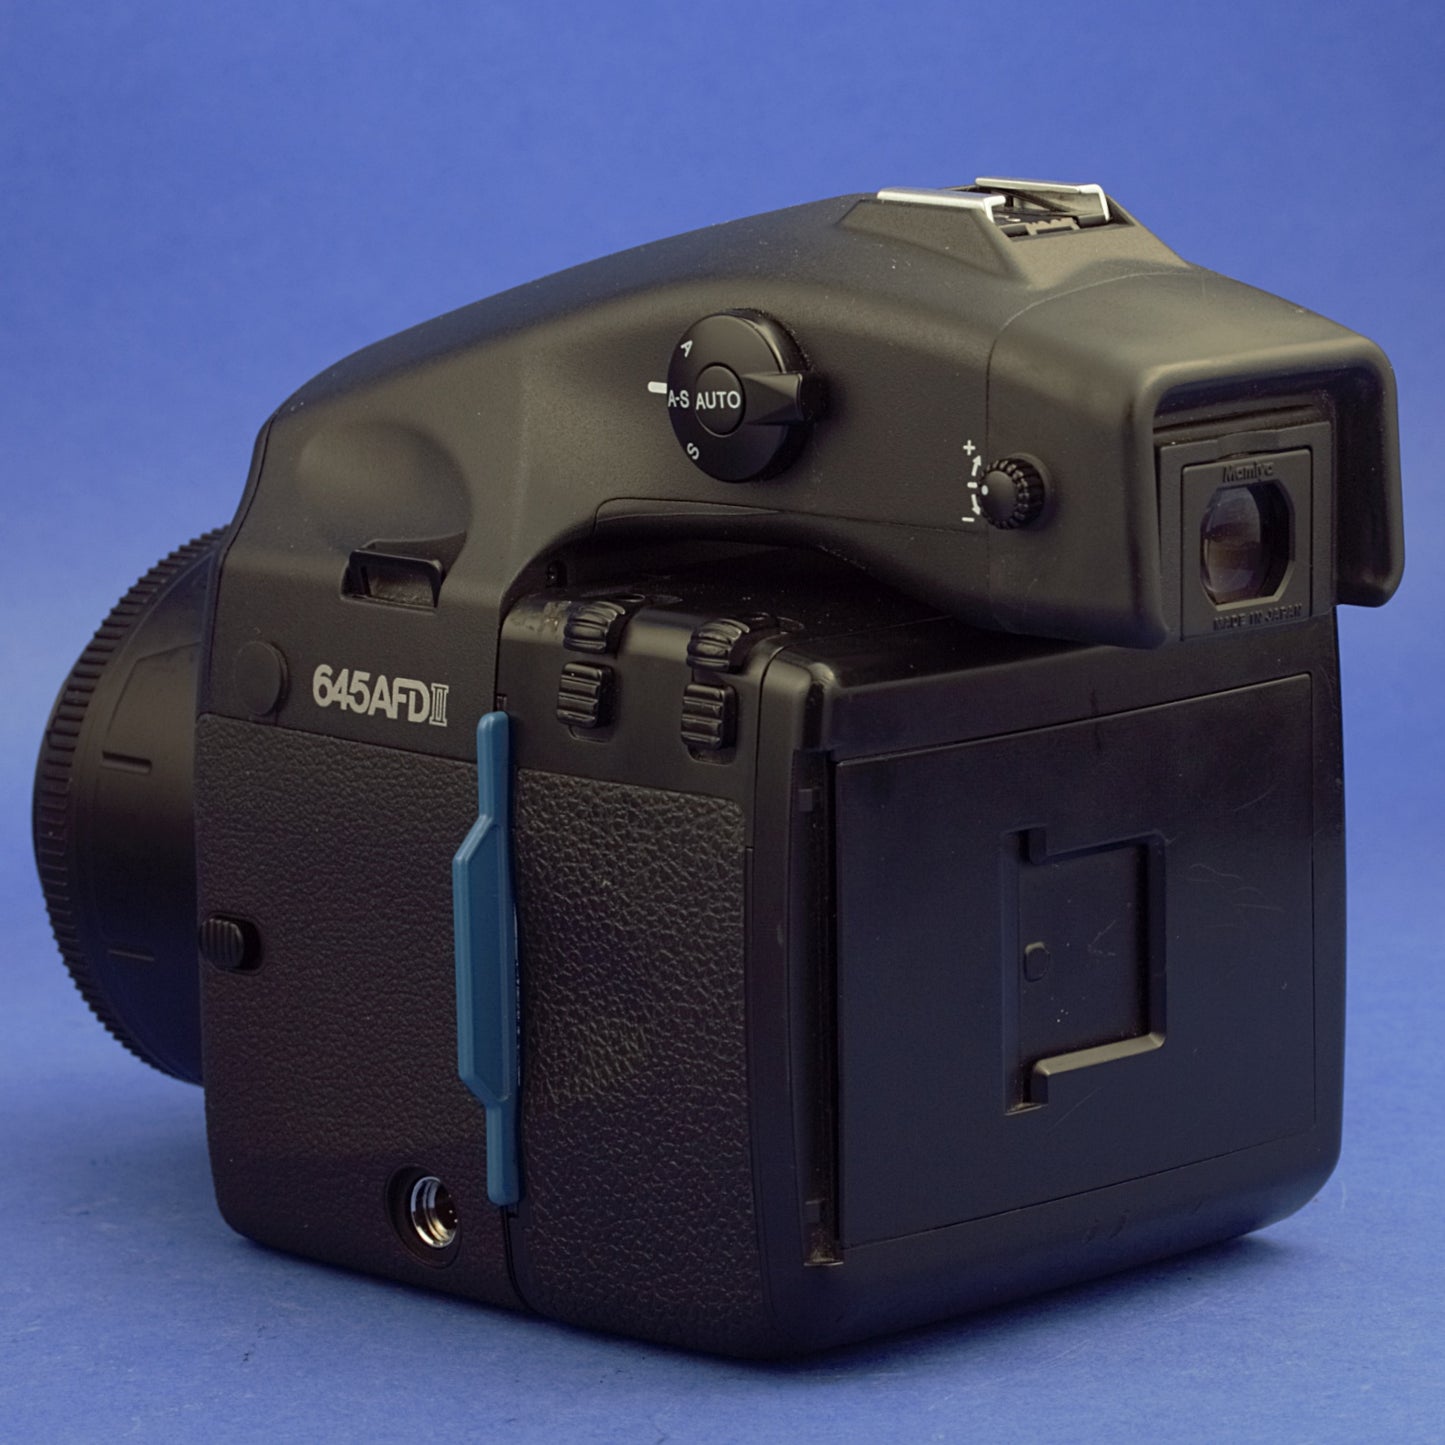 Mamiya 645 AFD II Medium Format Camera Kit